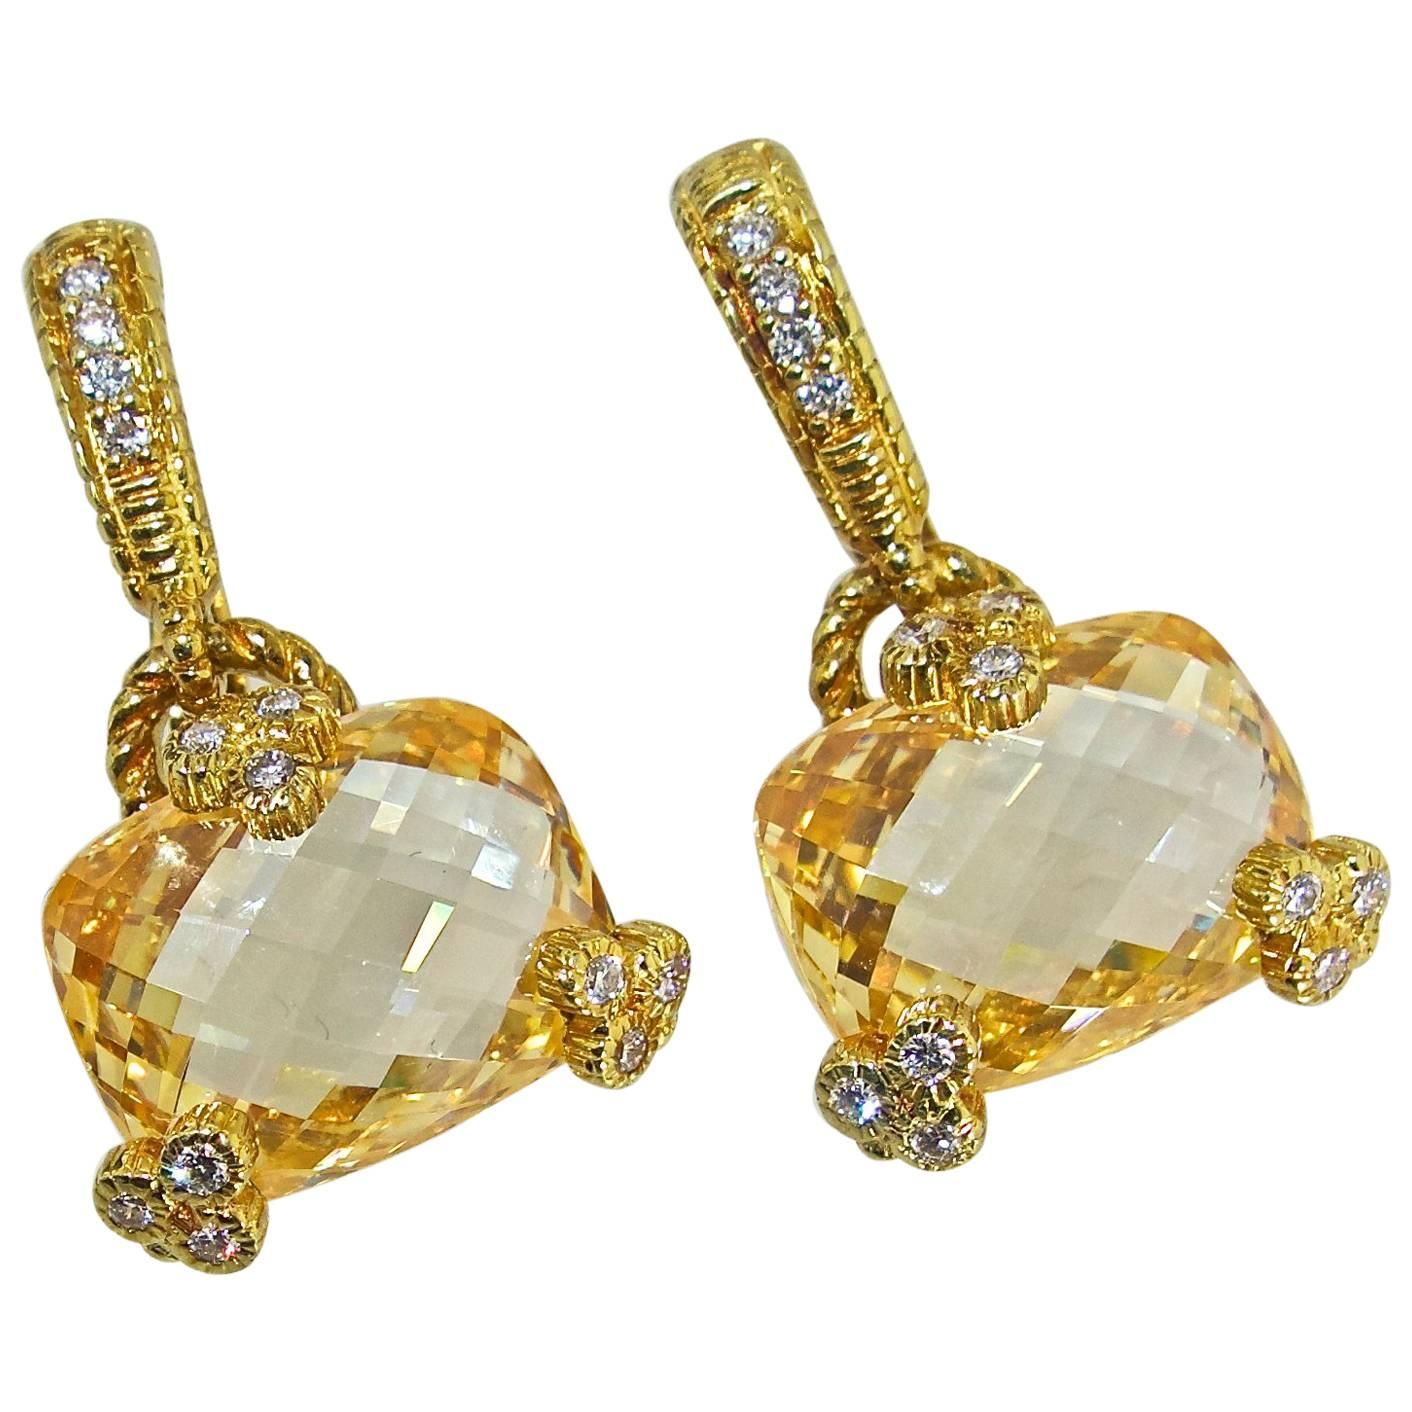 Judith Ripka 18 Karat, Diamond and Citrine Earrings